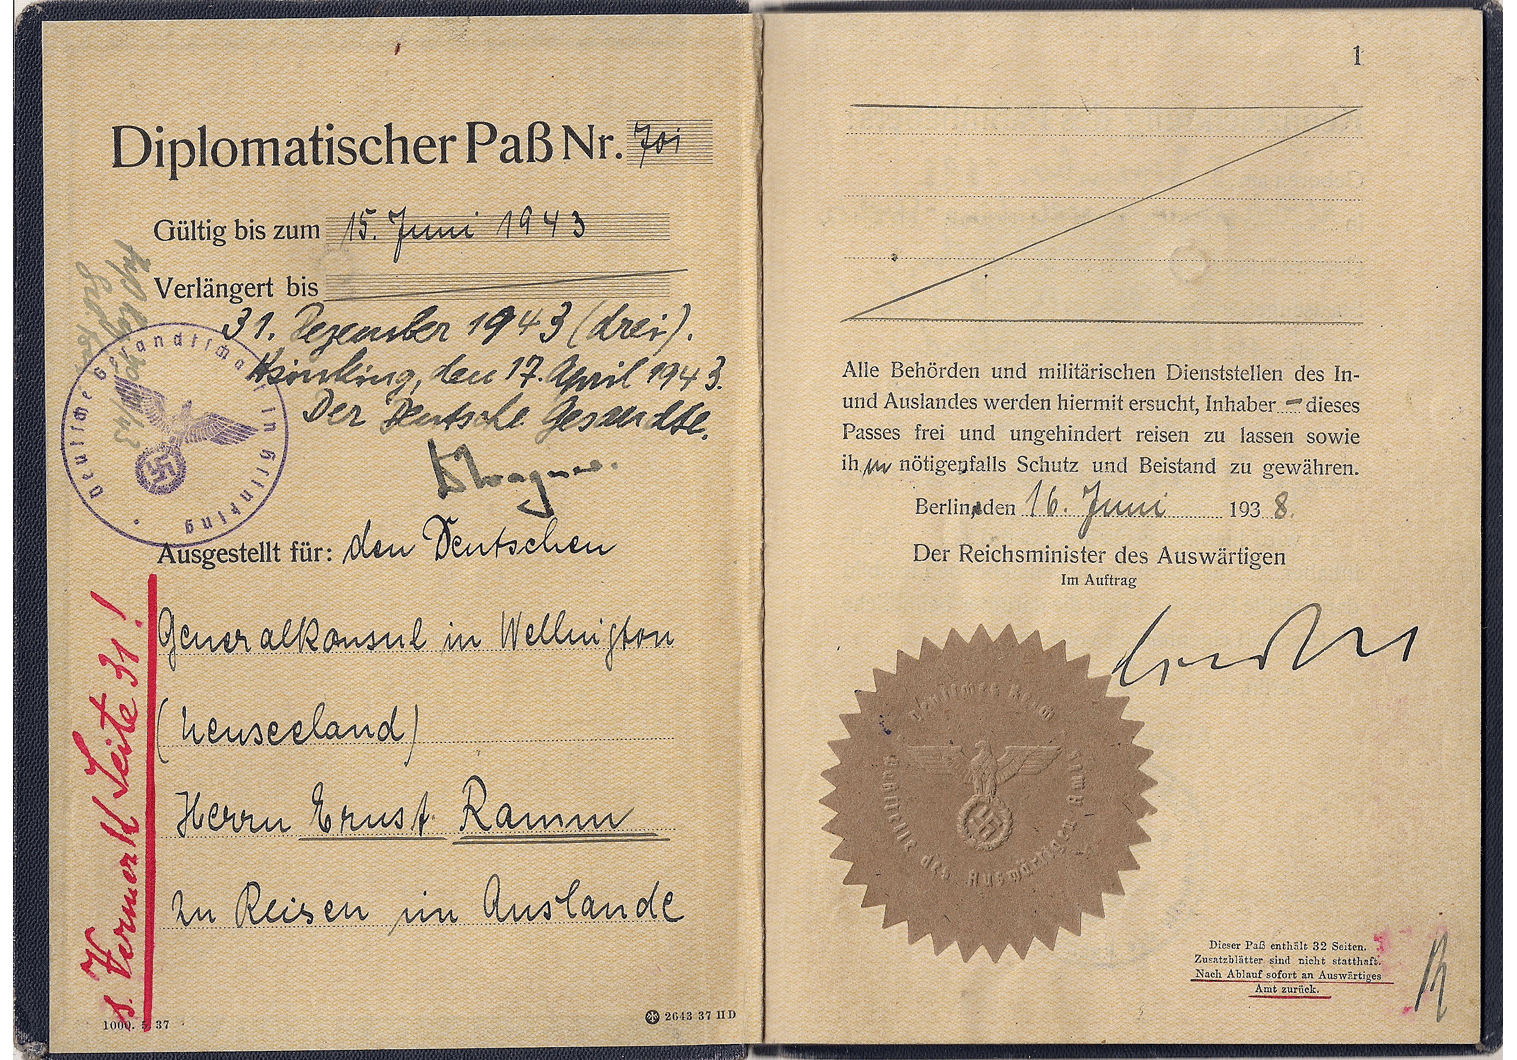 WW2 German diplomatic passport